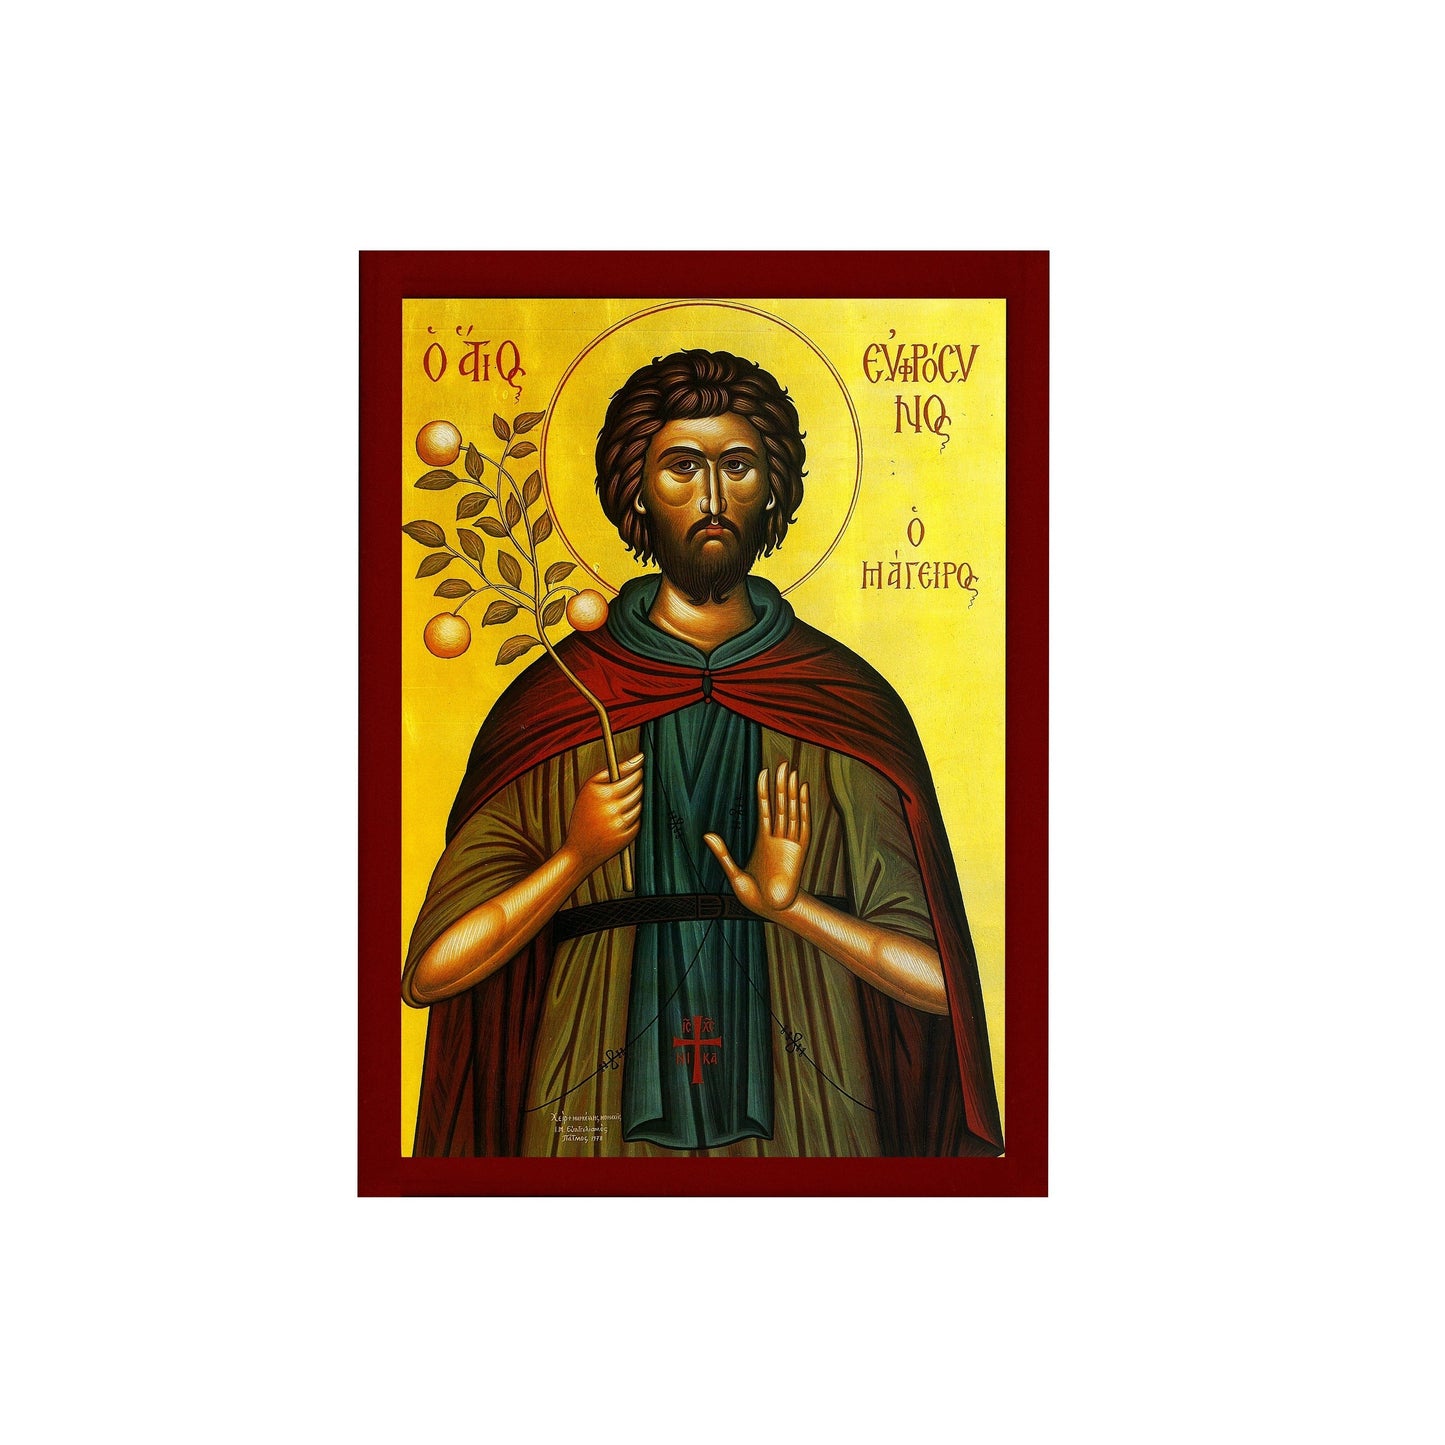 Saint Euphrosynus icon, Handmade Greek Orthodox icon St Euphrosynus the Cook Byzantine art wall hanging on wood plaque icon religious gift TheHolyArt